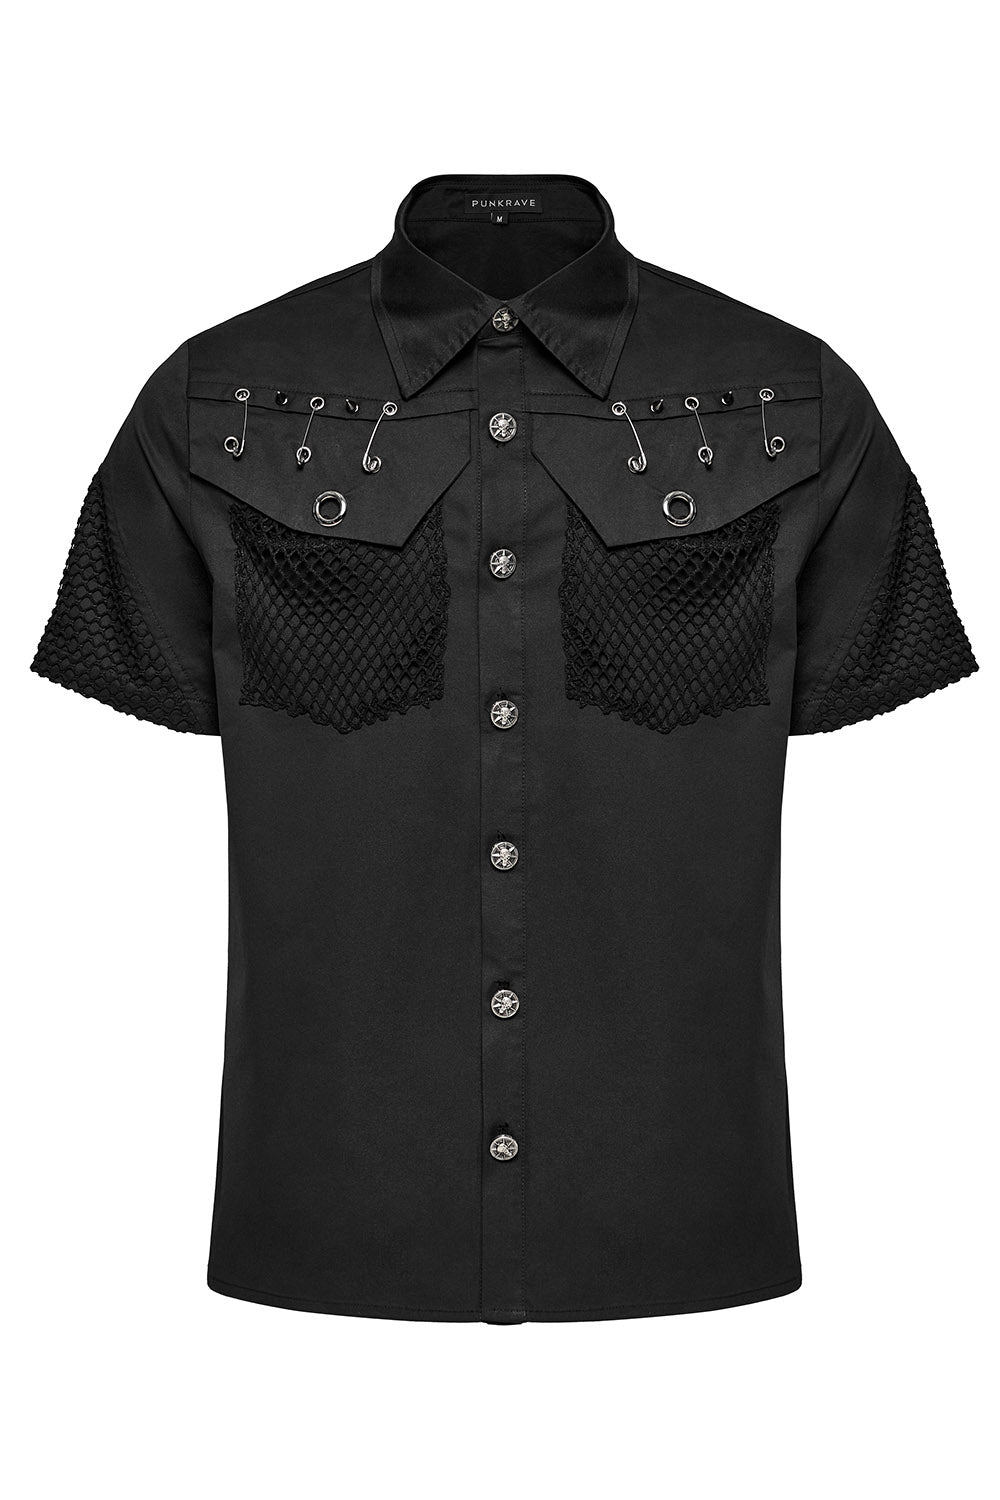 mens black punk collared button-up shirt